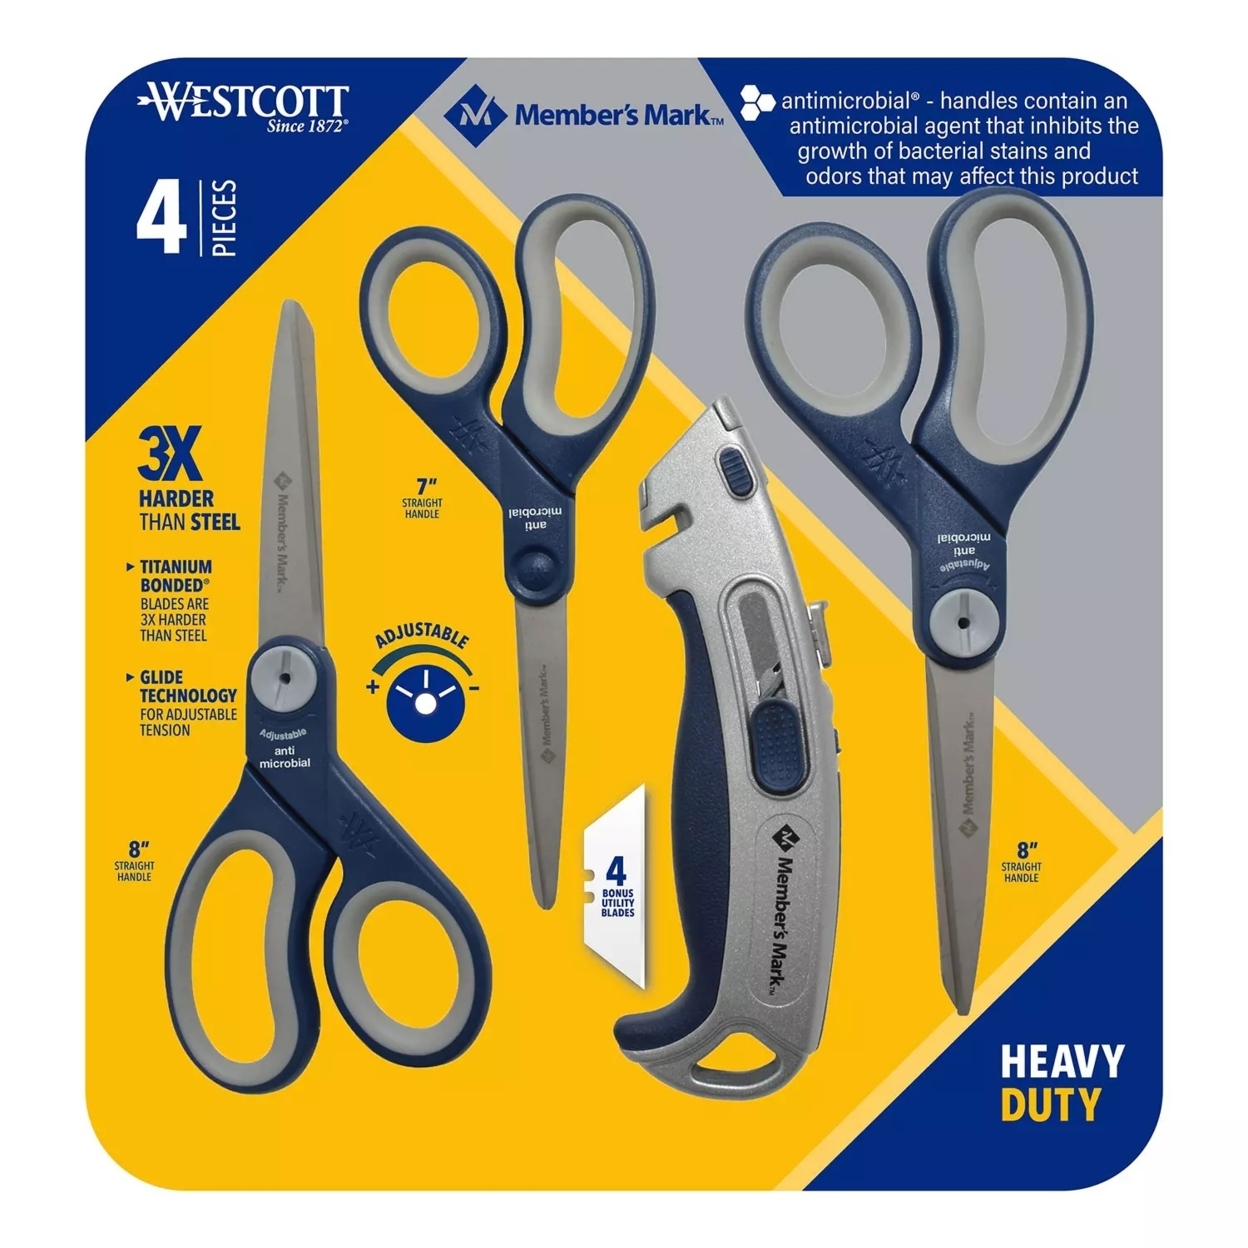 Member's Mark Scissors With Box Cutter